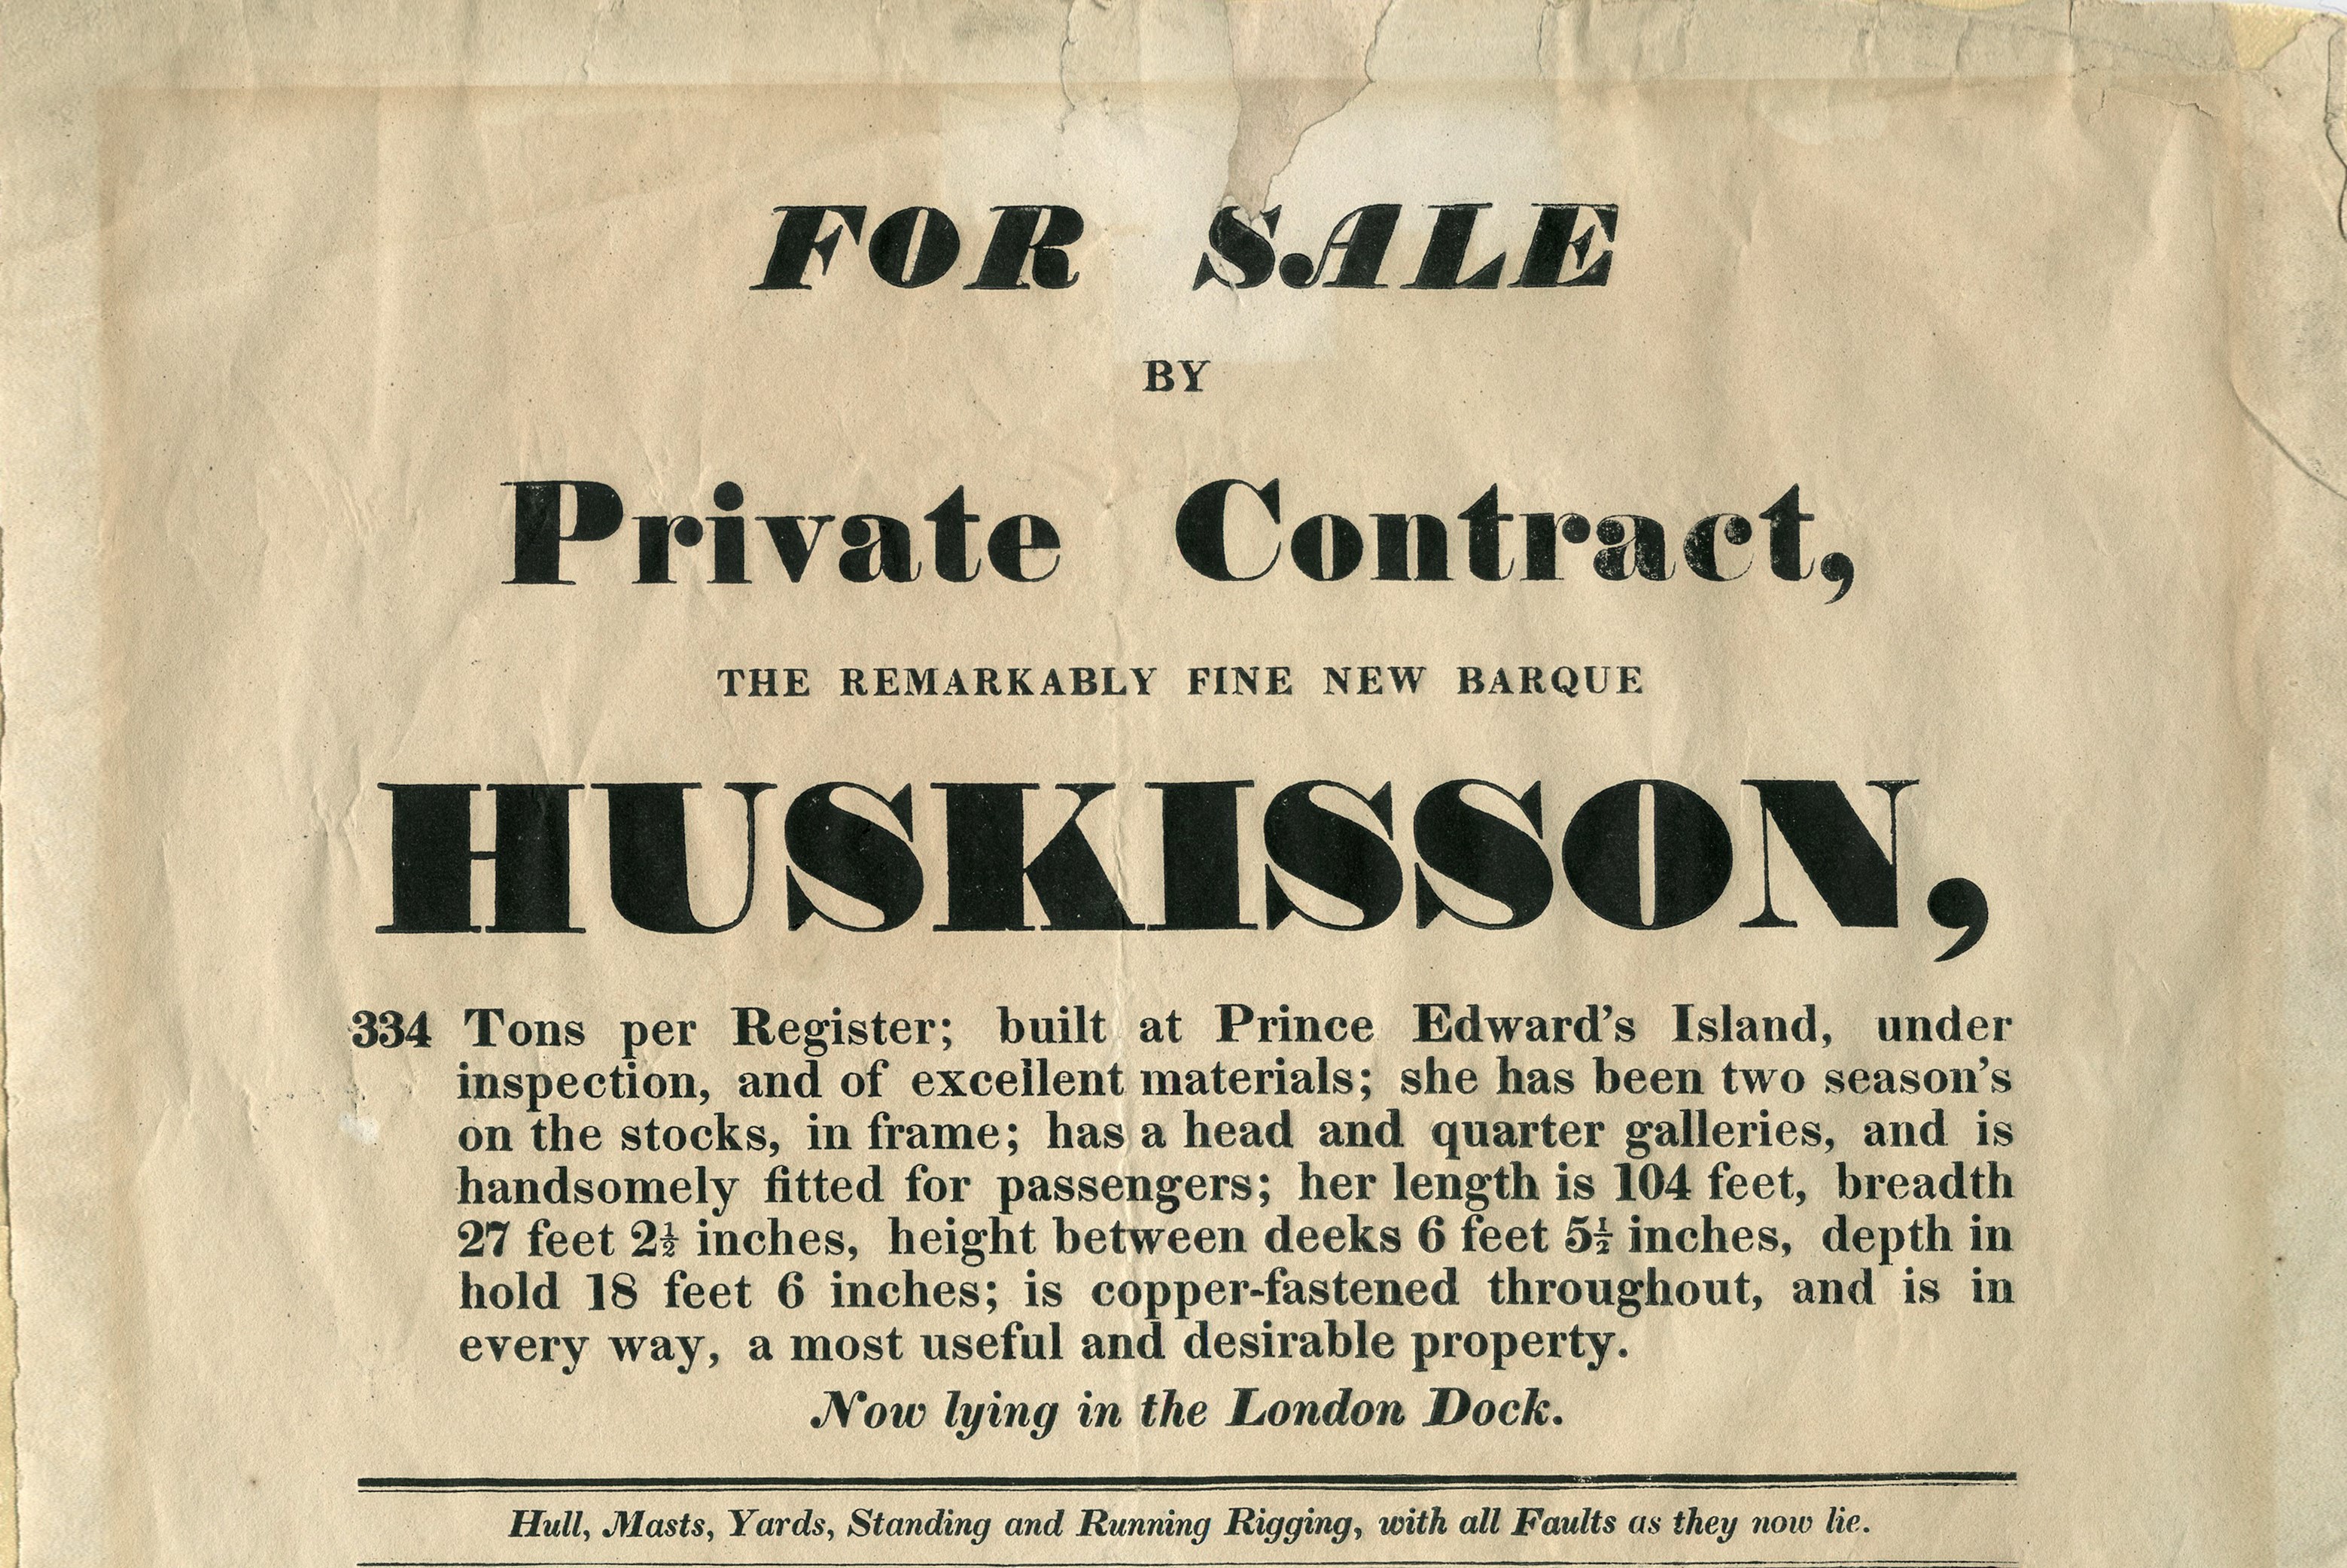 Sale handbill for Prince Edward Island-built barque Huskisson